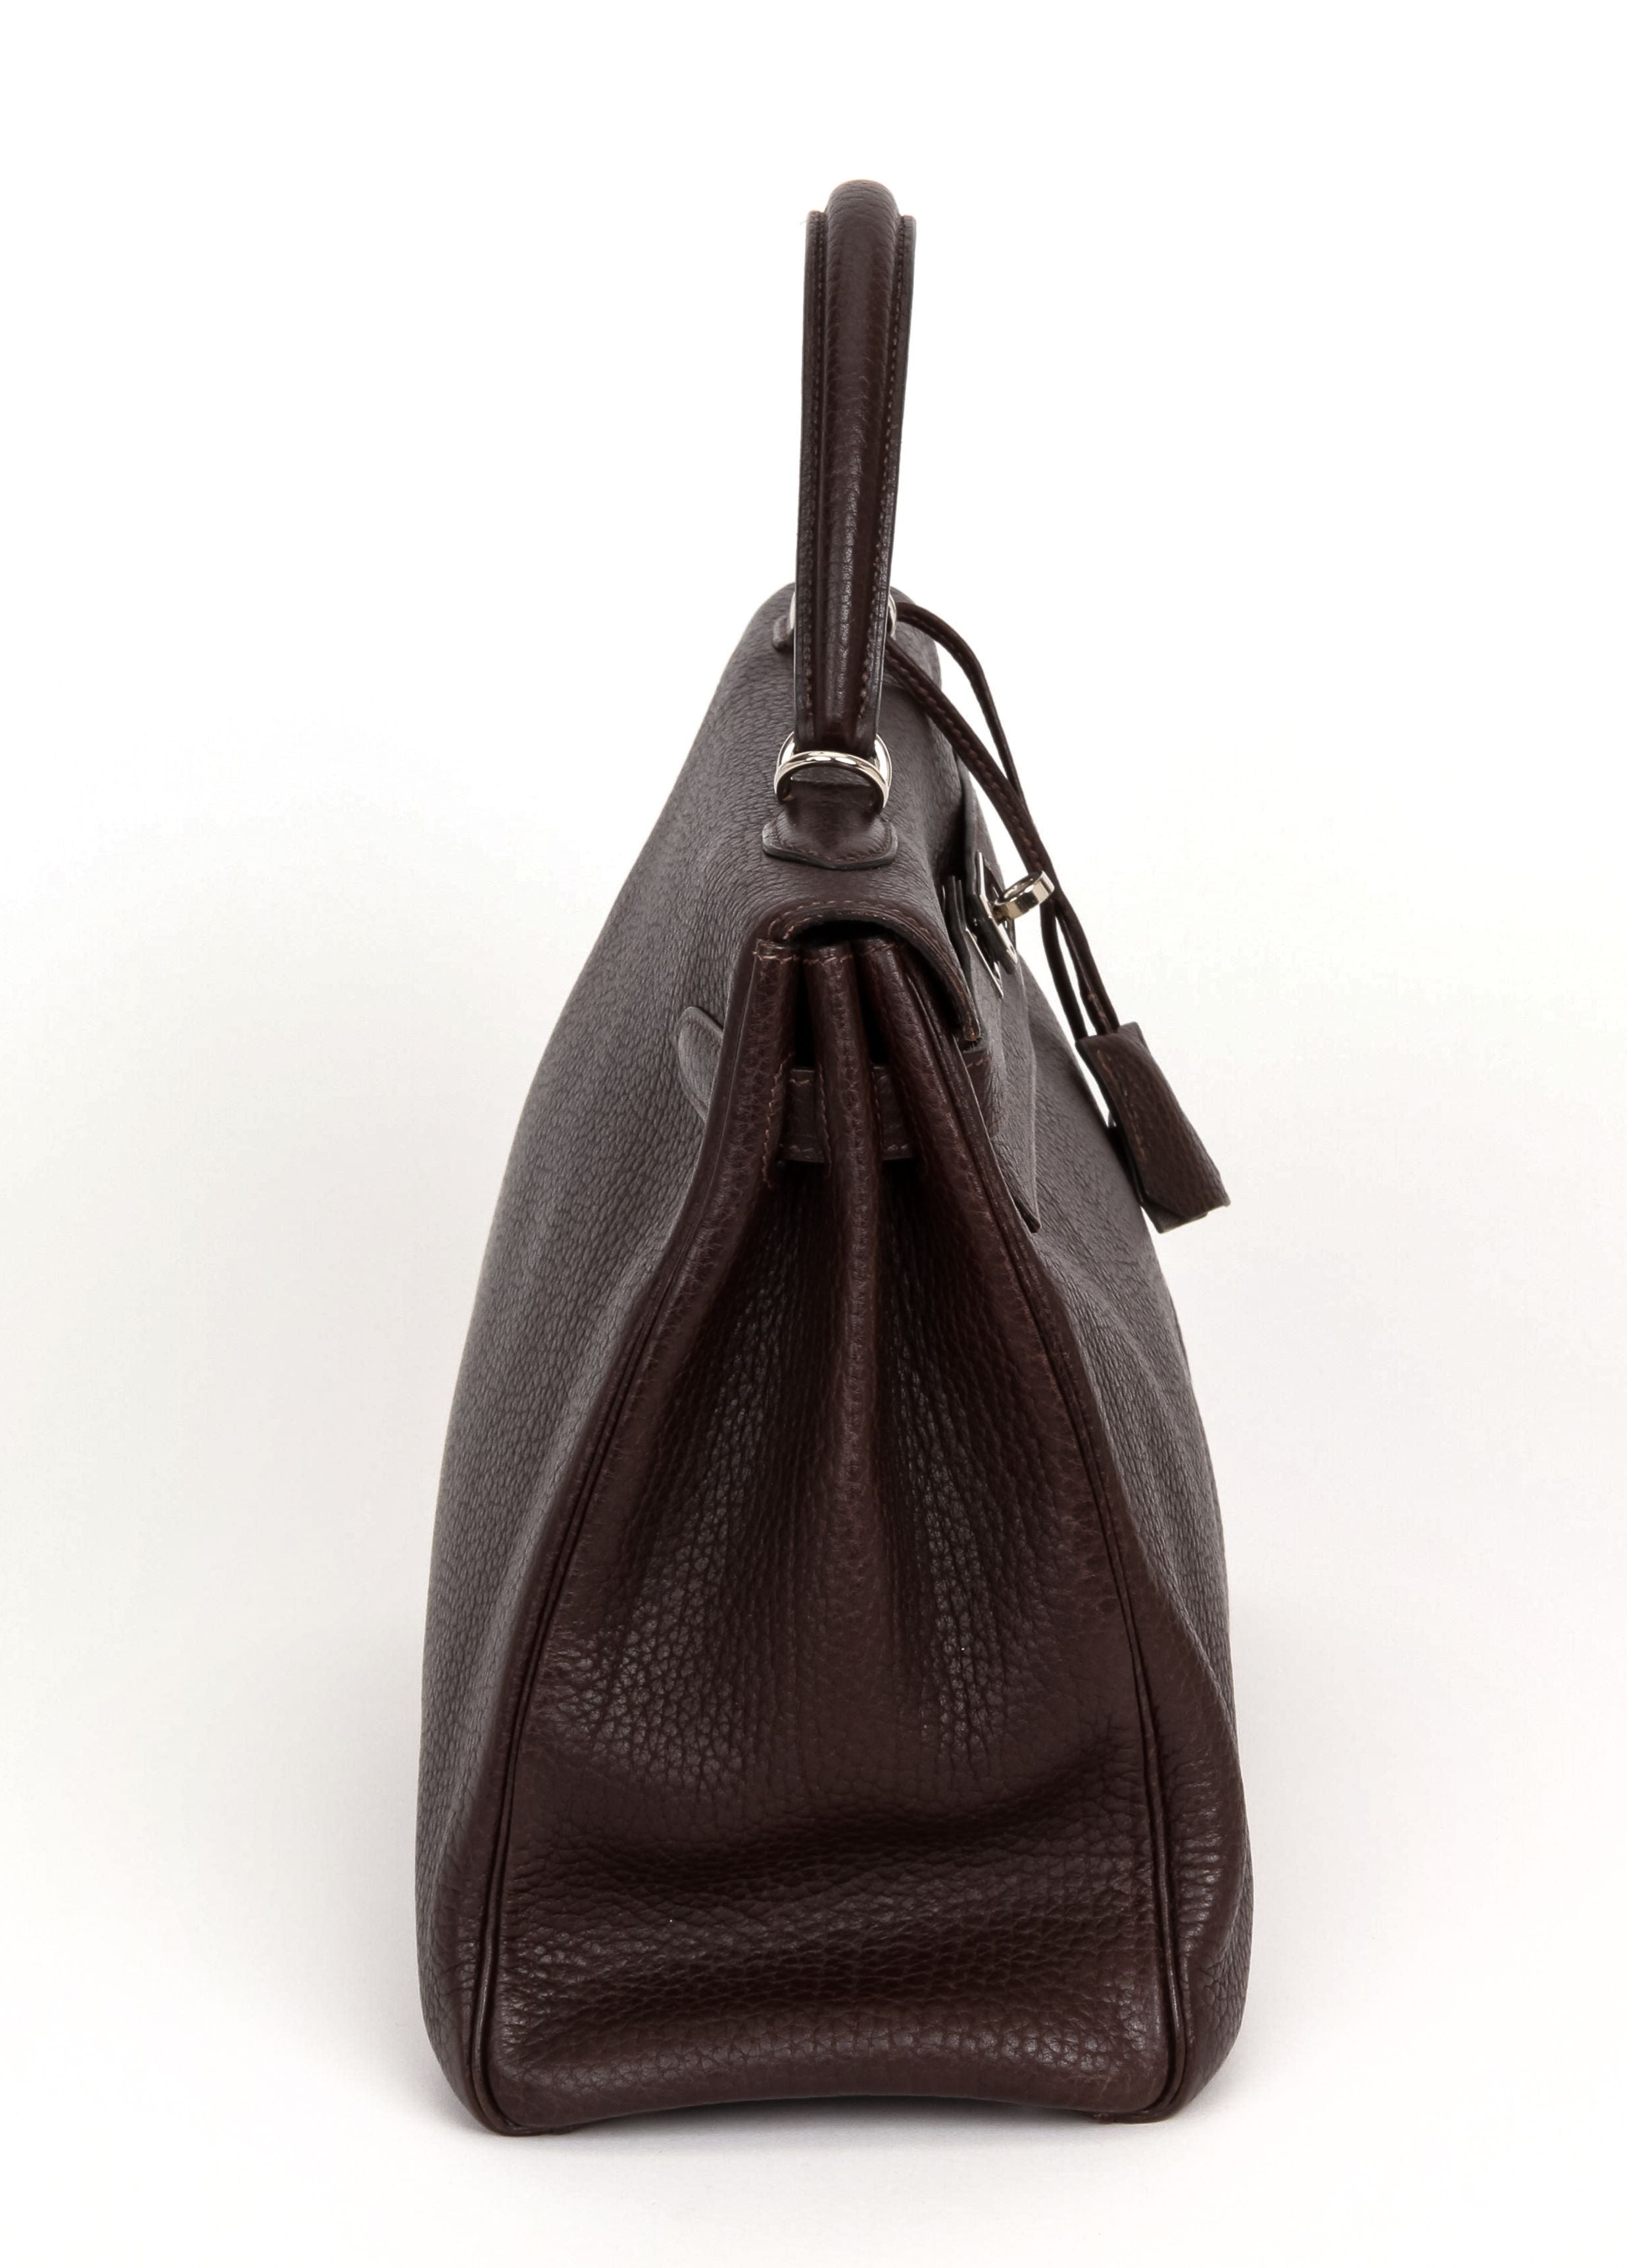 Hermes Birkin Mini Shoulder Bag Togo Leather Palladium Hardware In Coffee